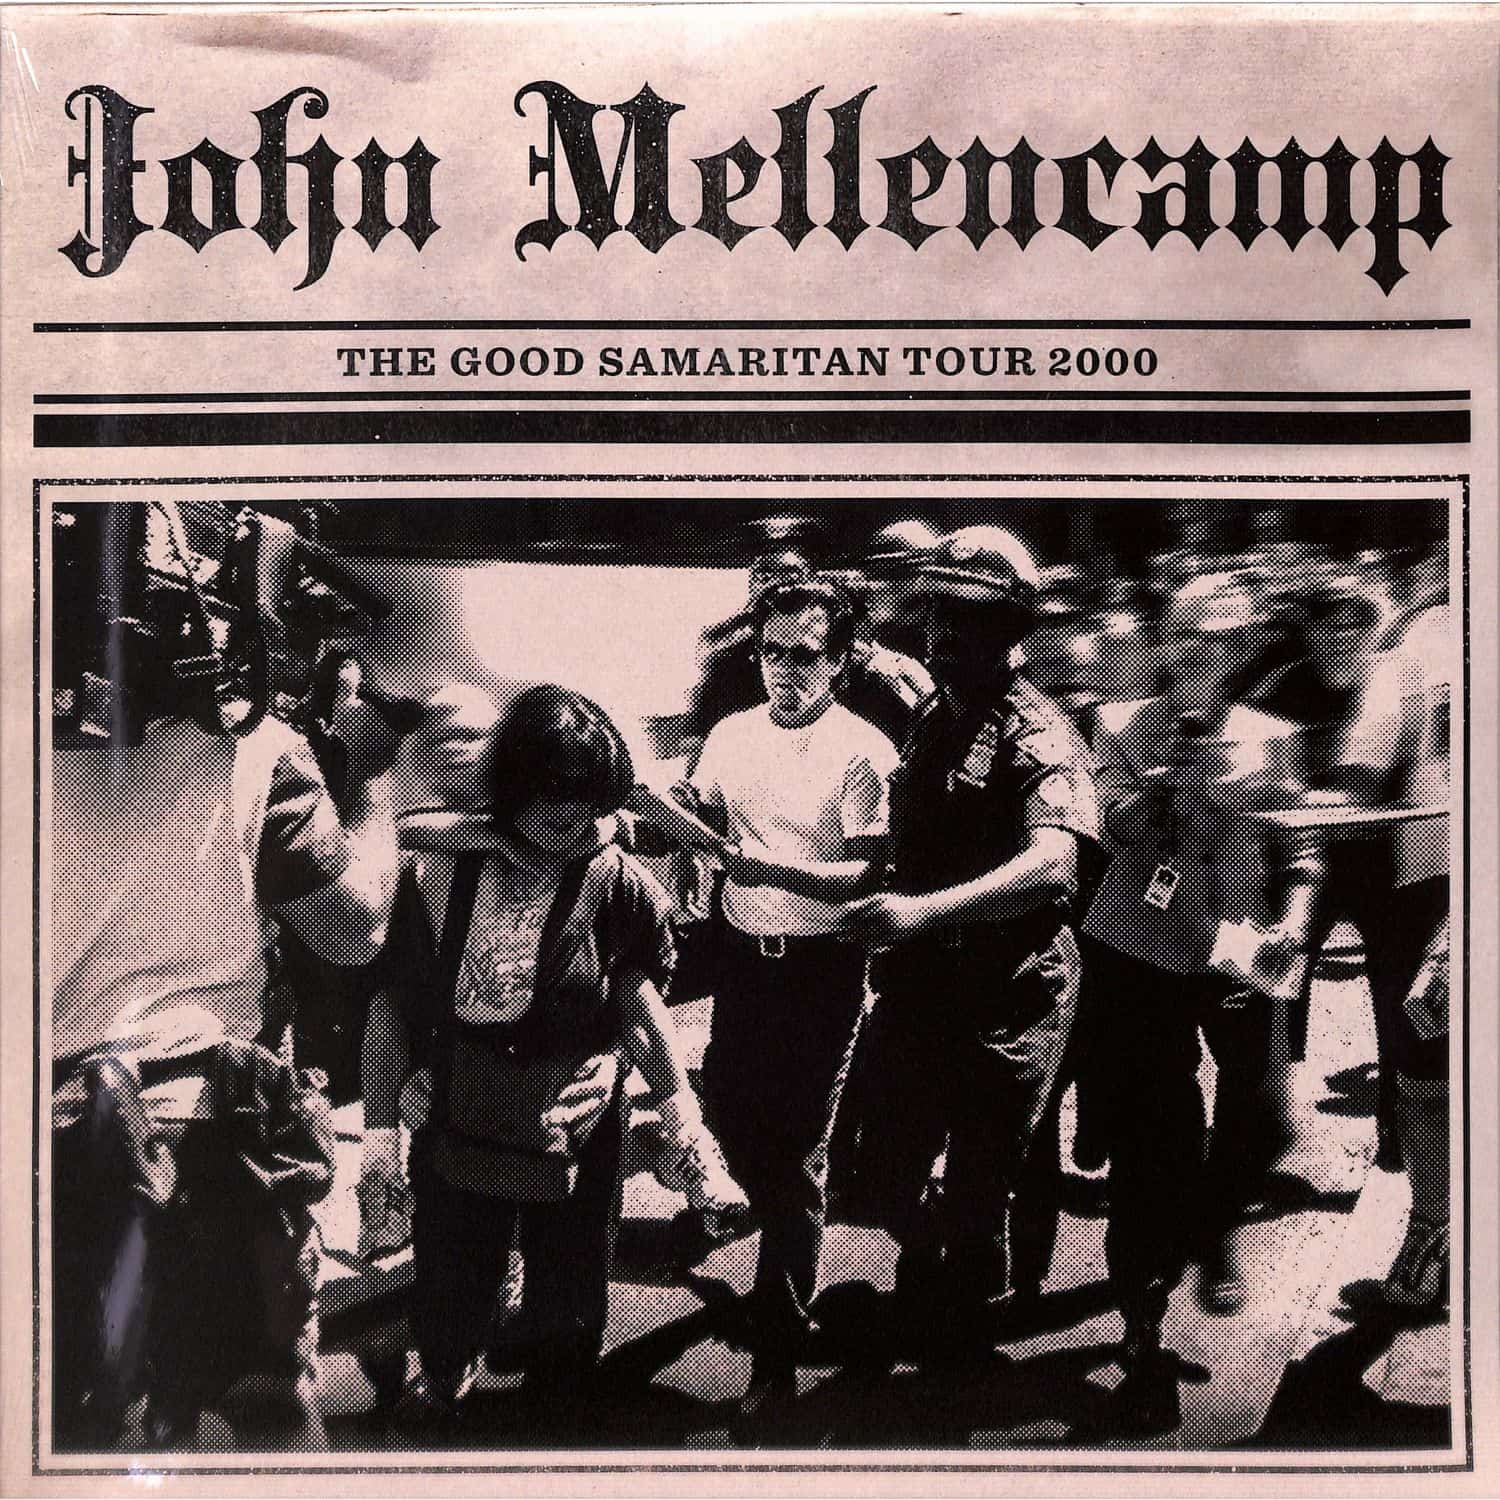 John Mellencamp - THE GOOD SAMARITAN TOUR 2000 